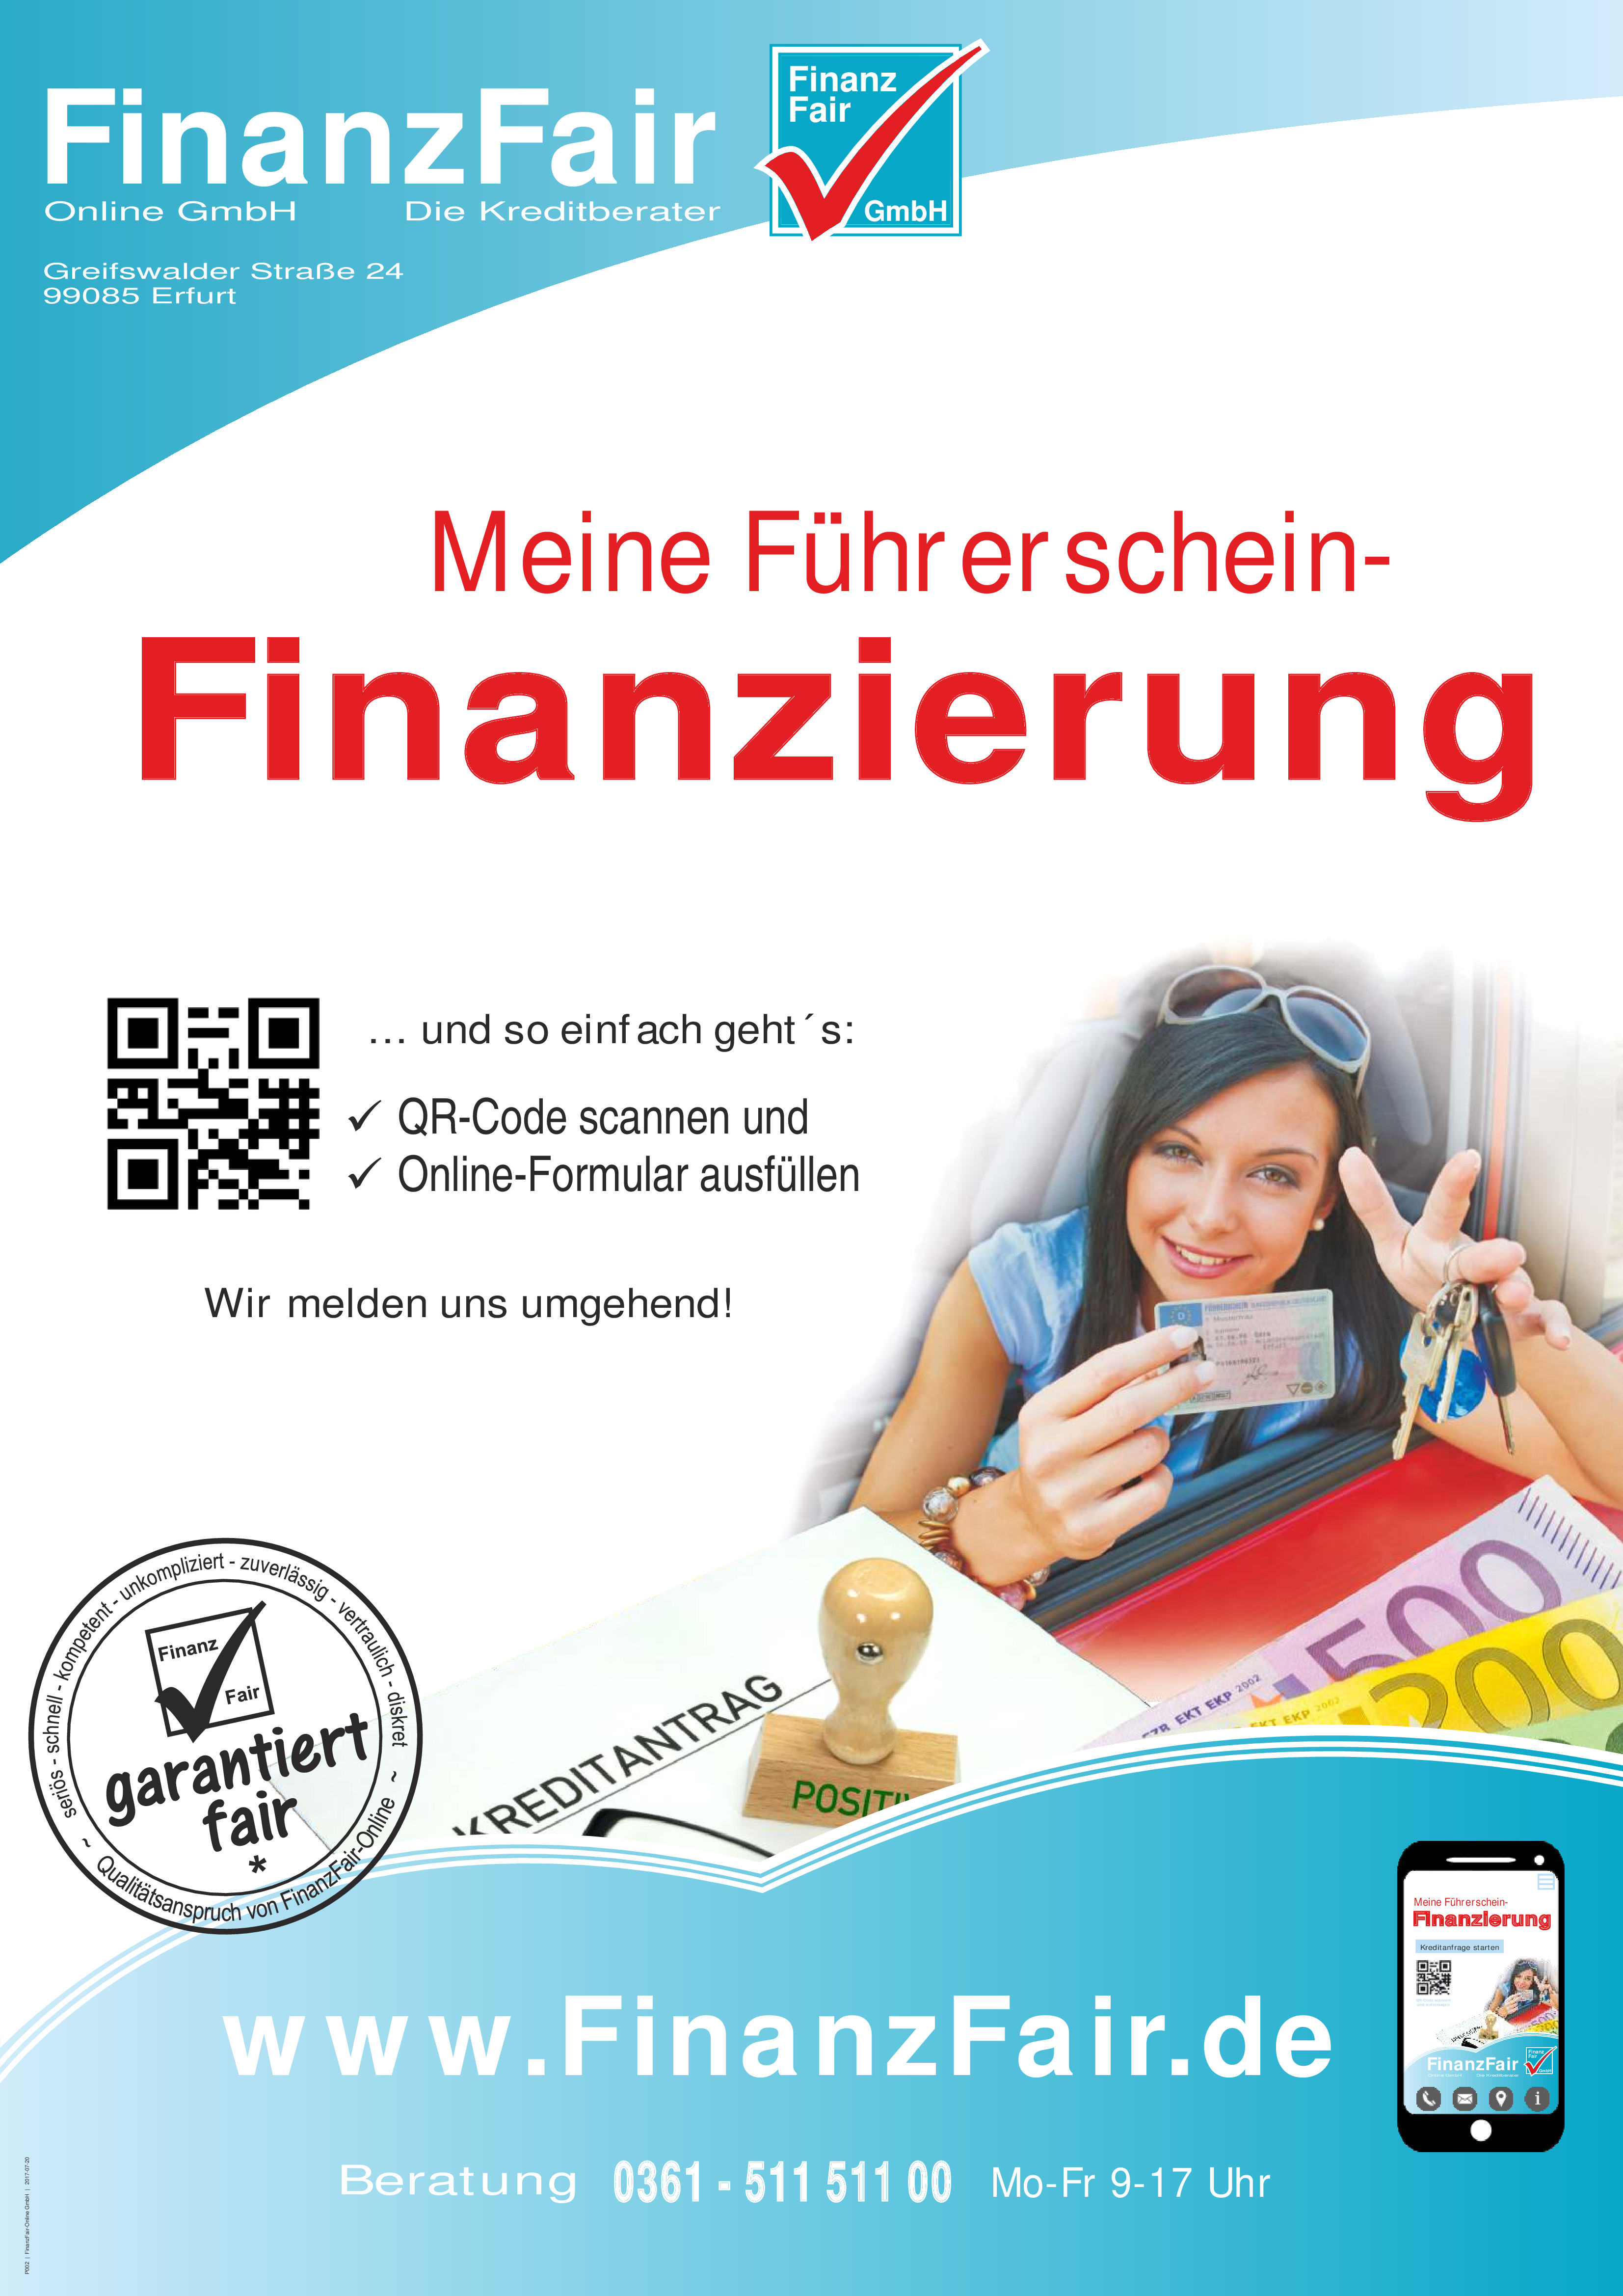 partner-logo-finanzfair